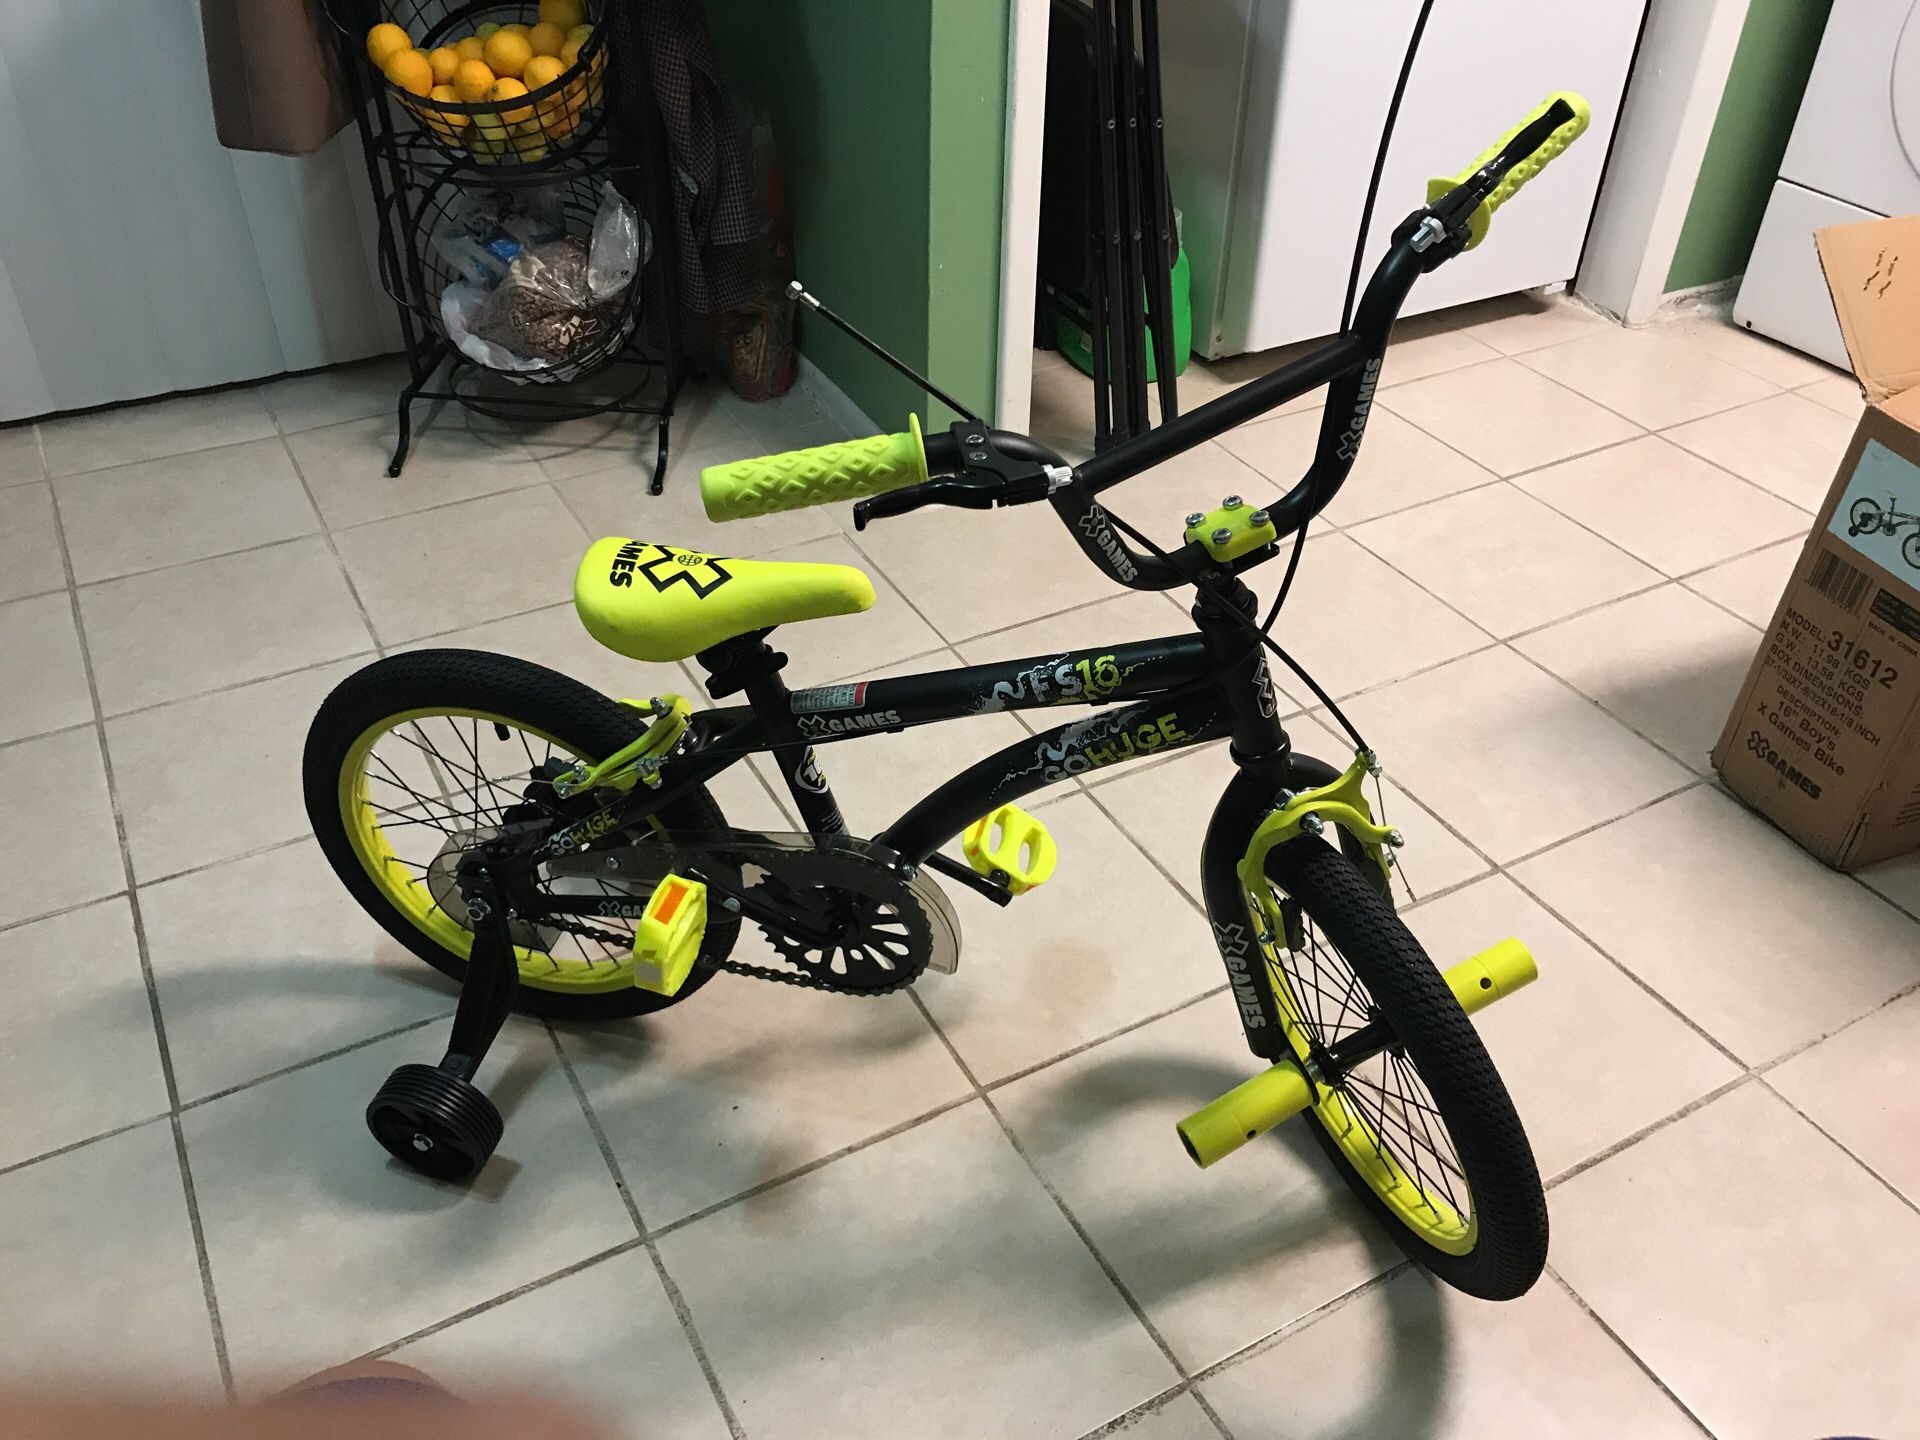 New bike for kids